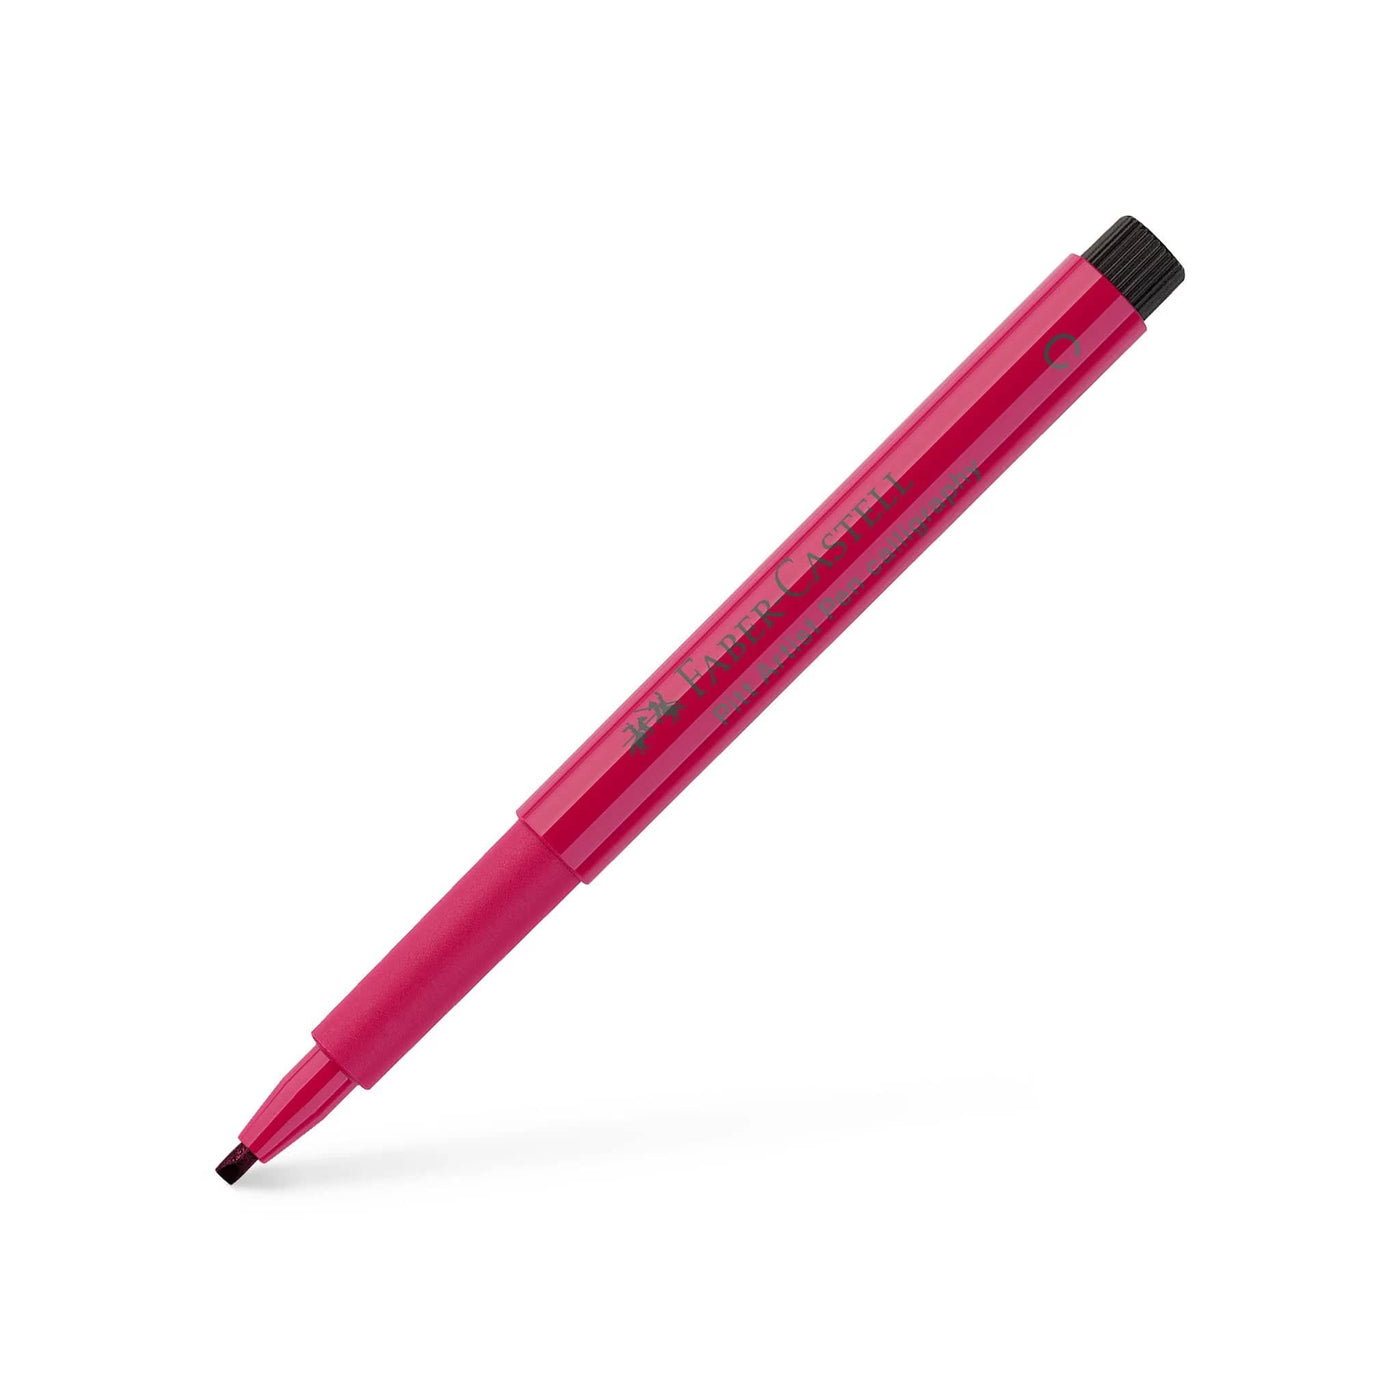 Calligraphy Pitt Artist Pen from Faber Castell - 127 Pink Carmine